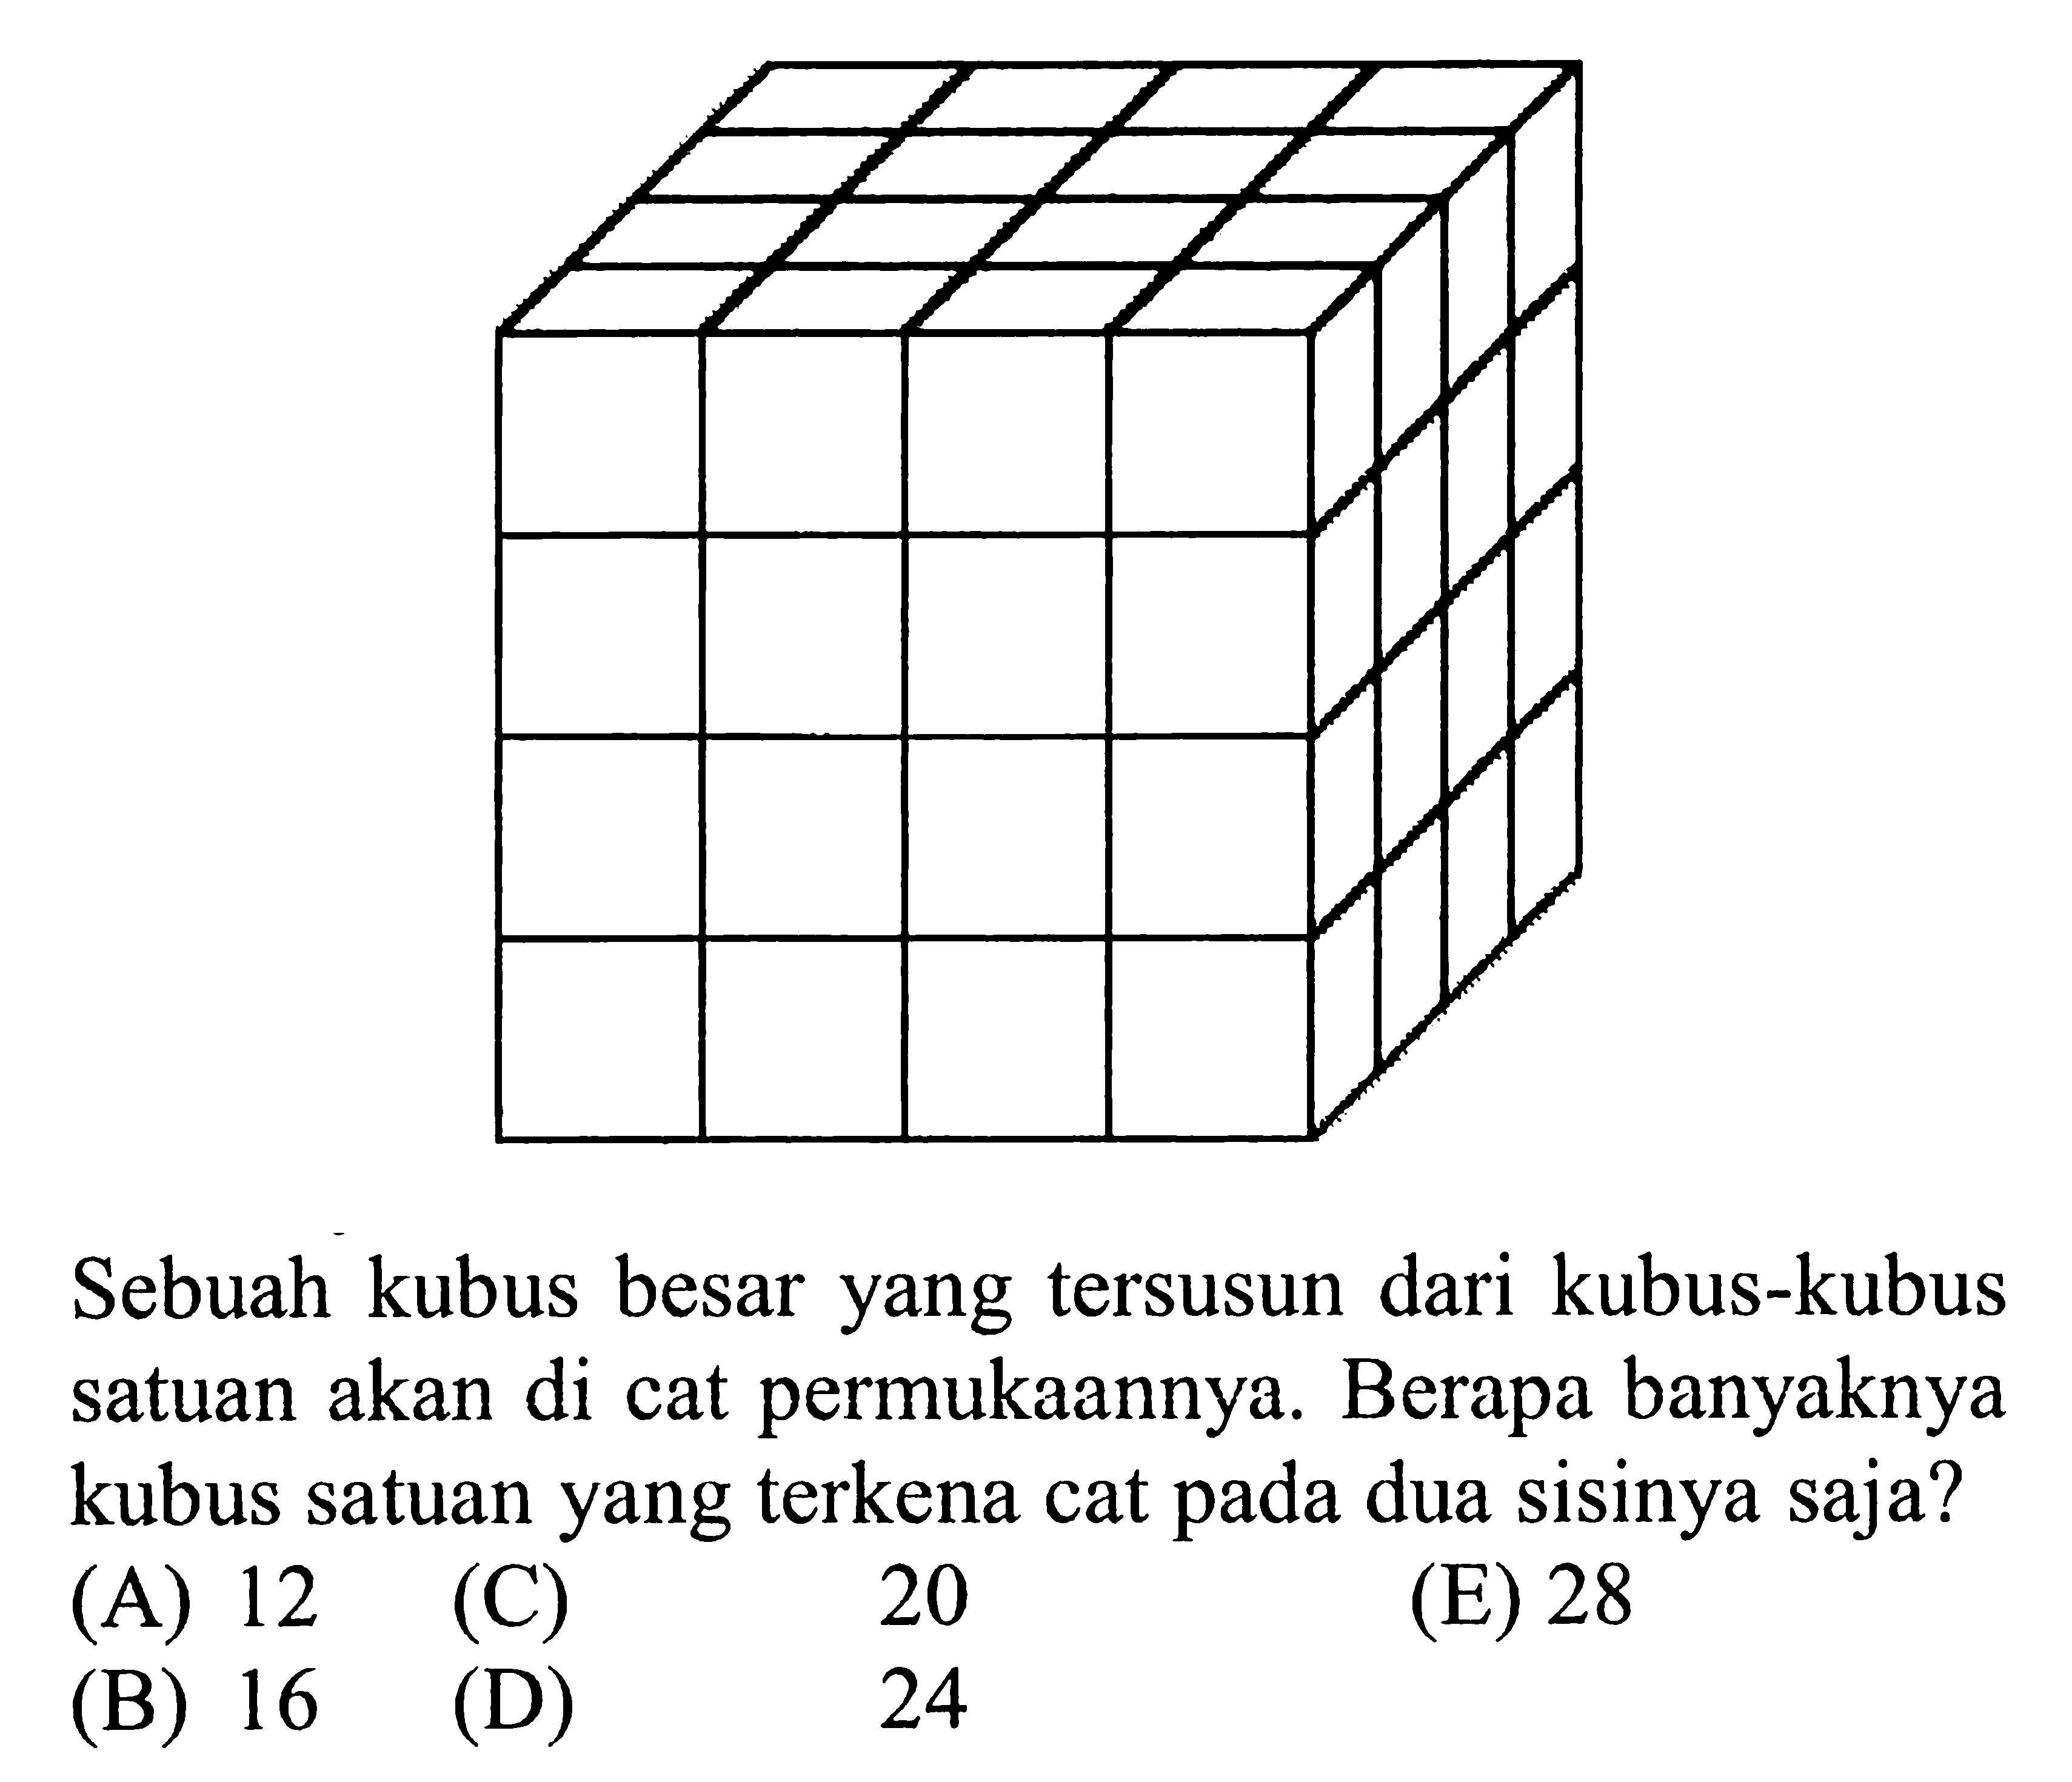 Sebuah kubus besar yang tersusun dari kubus-kubus satuan akan di cat permukaannya. Berapa banyaknya kubus satuan yang terkena cat pada dua sisinya saja?